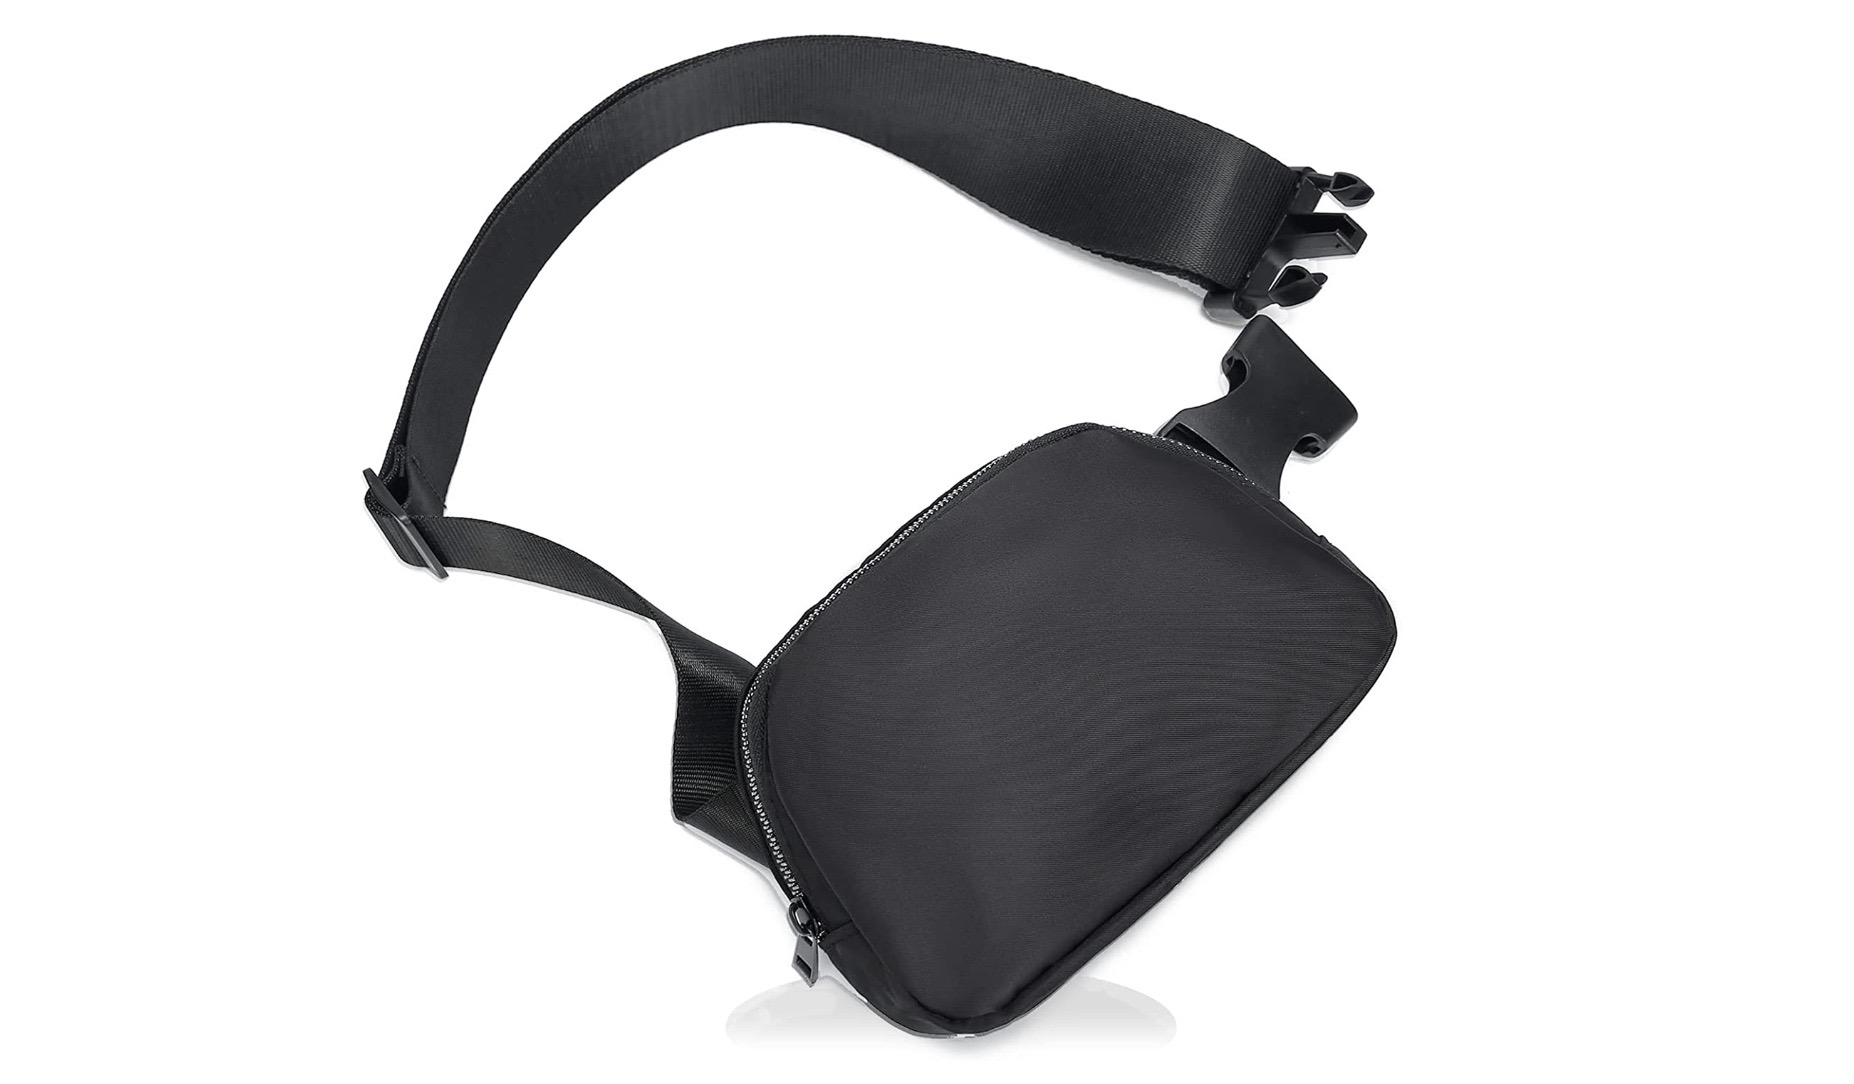  Telena Belt Bag for Women Men Fashionable Crossbody Fanny Pack  for Women Waist Bag with Adjustable Strap Black